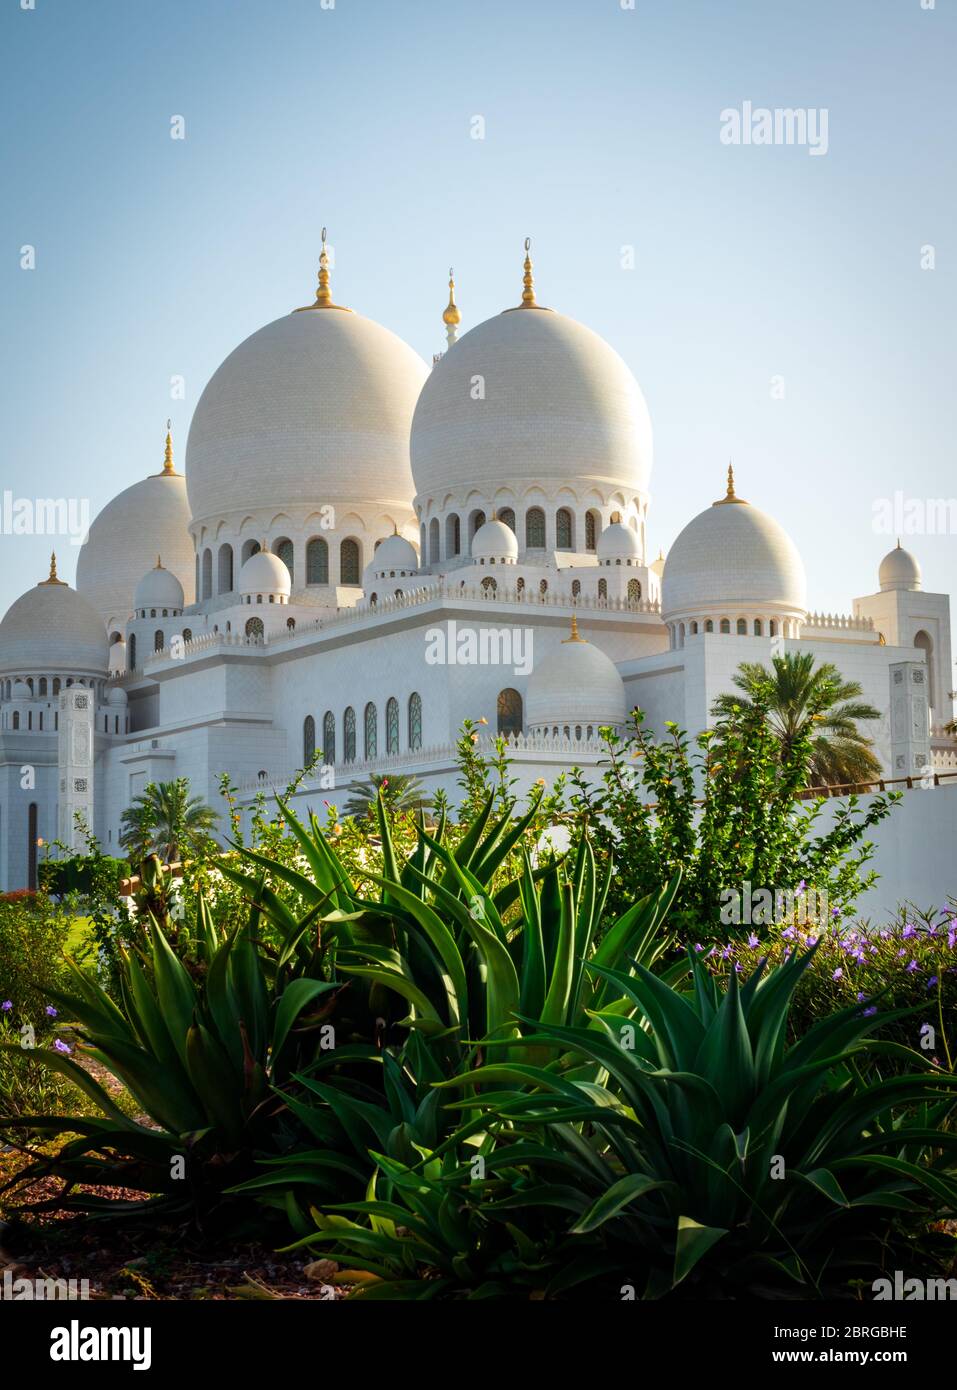 sheikh zayed grand mosque in abu dhabi intended by late president of UAE sheikh zayed bin sultan al nahyen Stock Photo